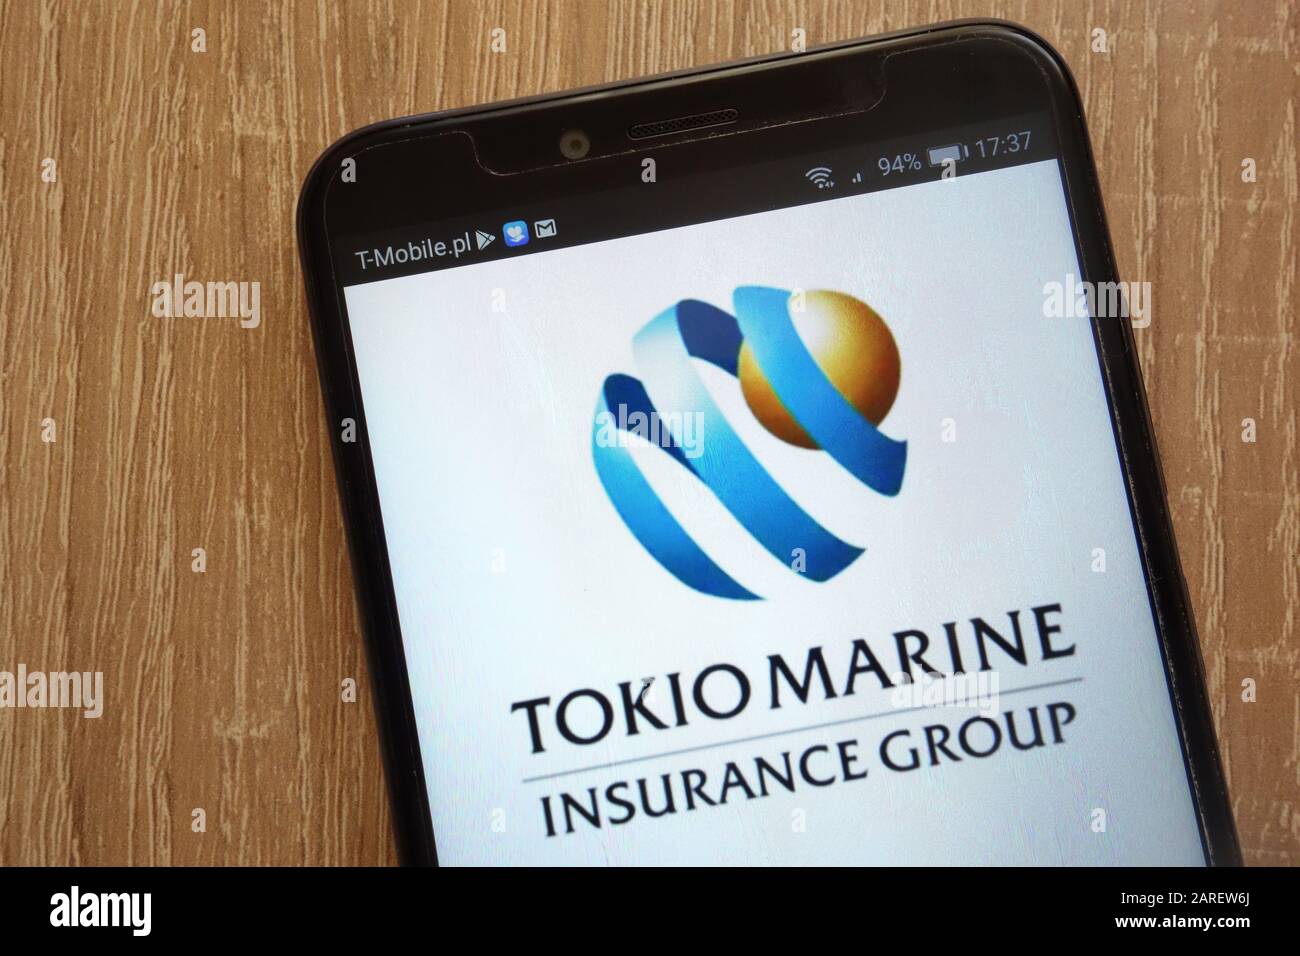 Tokio Marine Insurance Group logo displayed on a modern smartphone Stock Photo